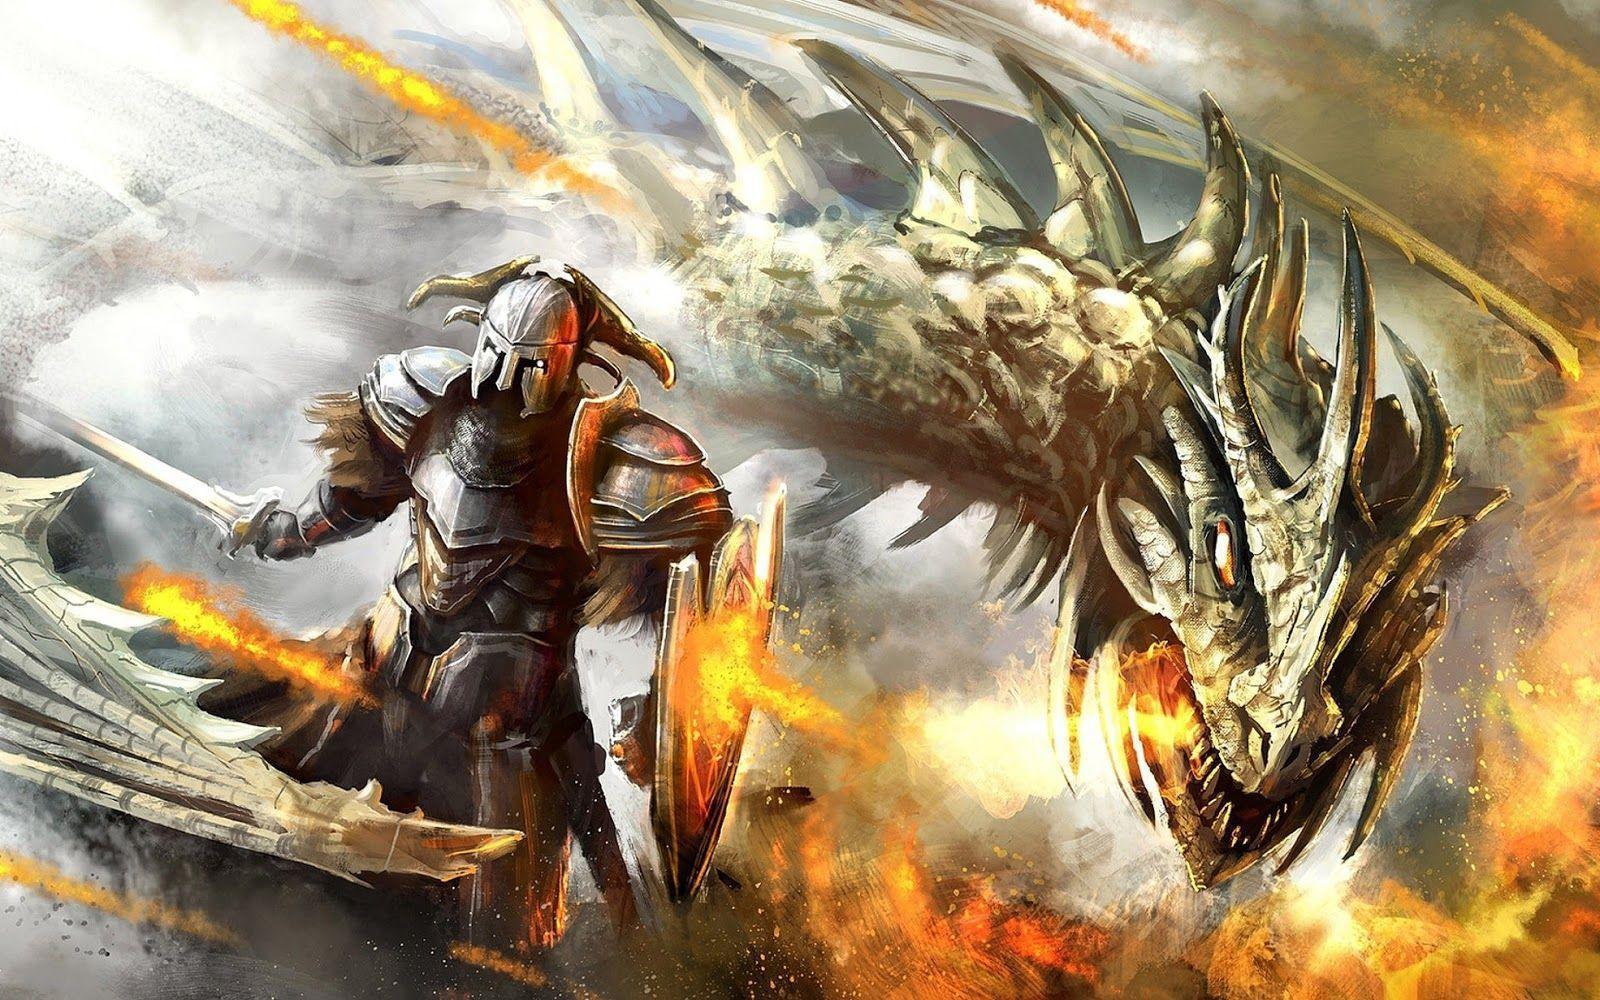 Wallpaper For > Epic Dragon Fantasy Wallpaper